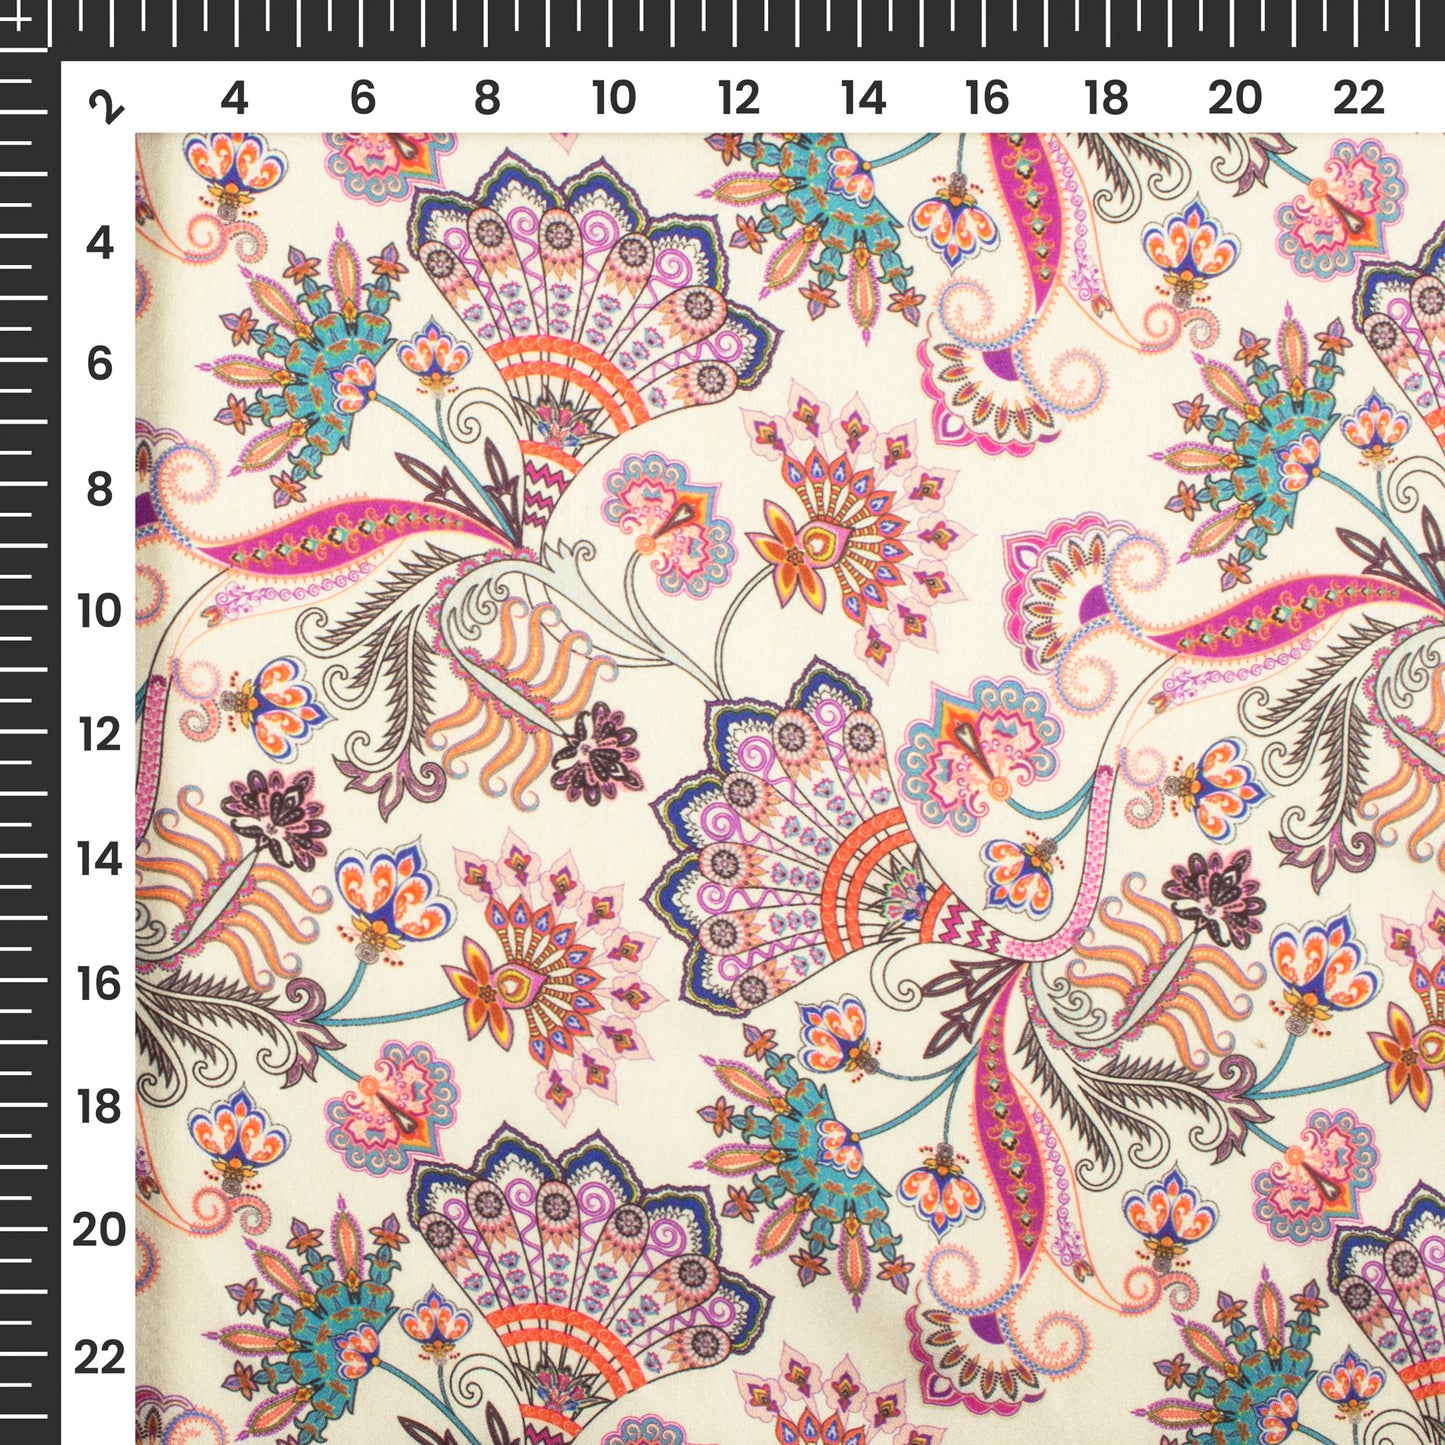 Cream Floral Digital Print Japan Satin Fabric